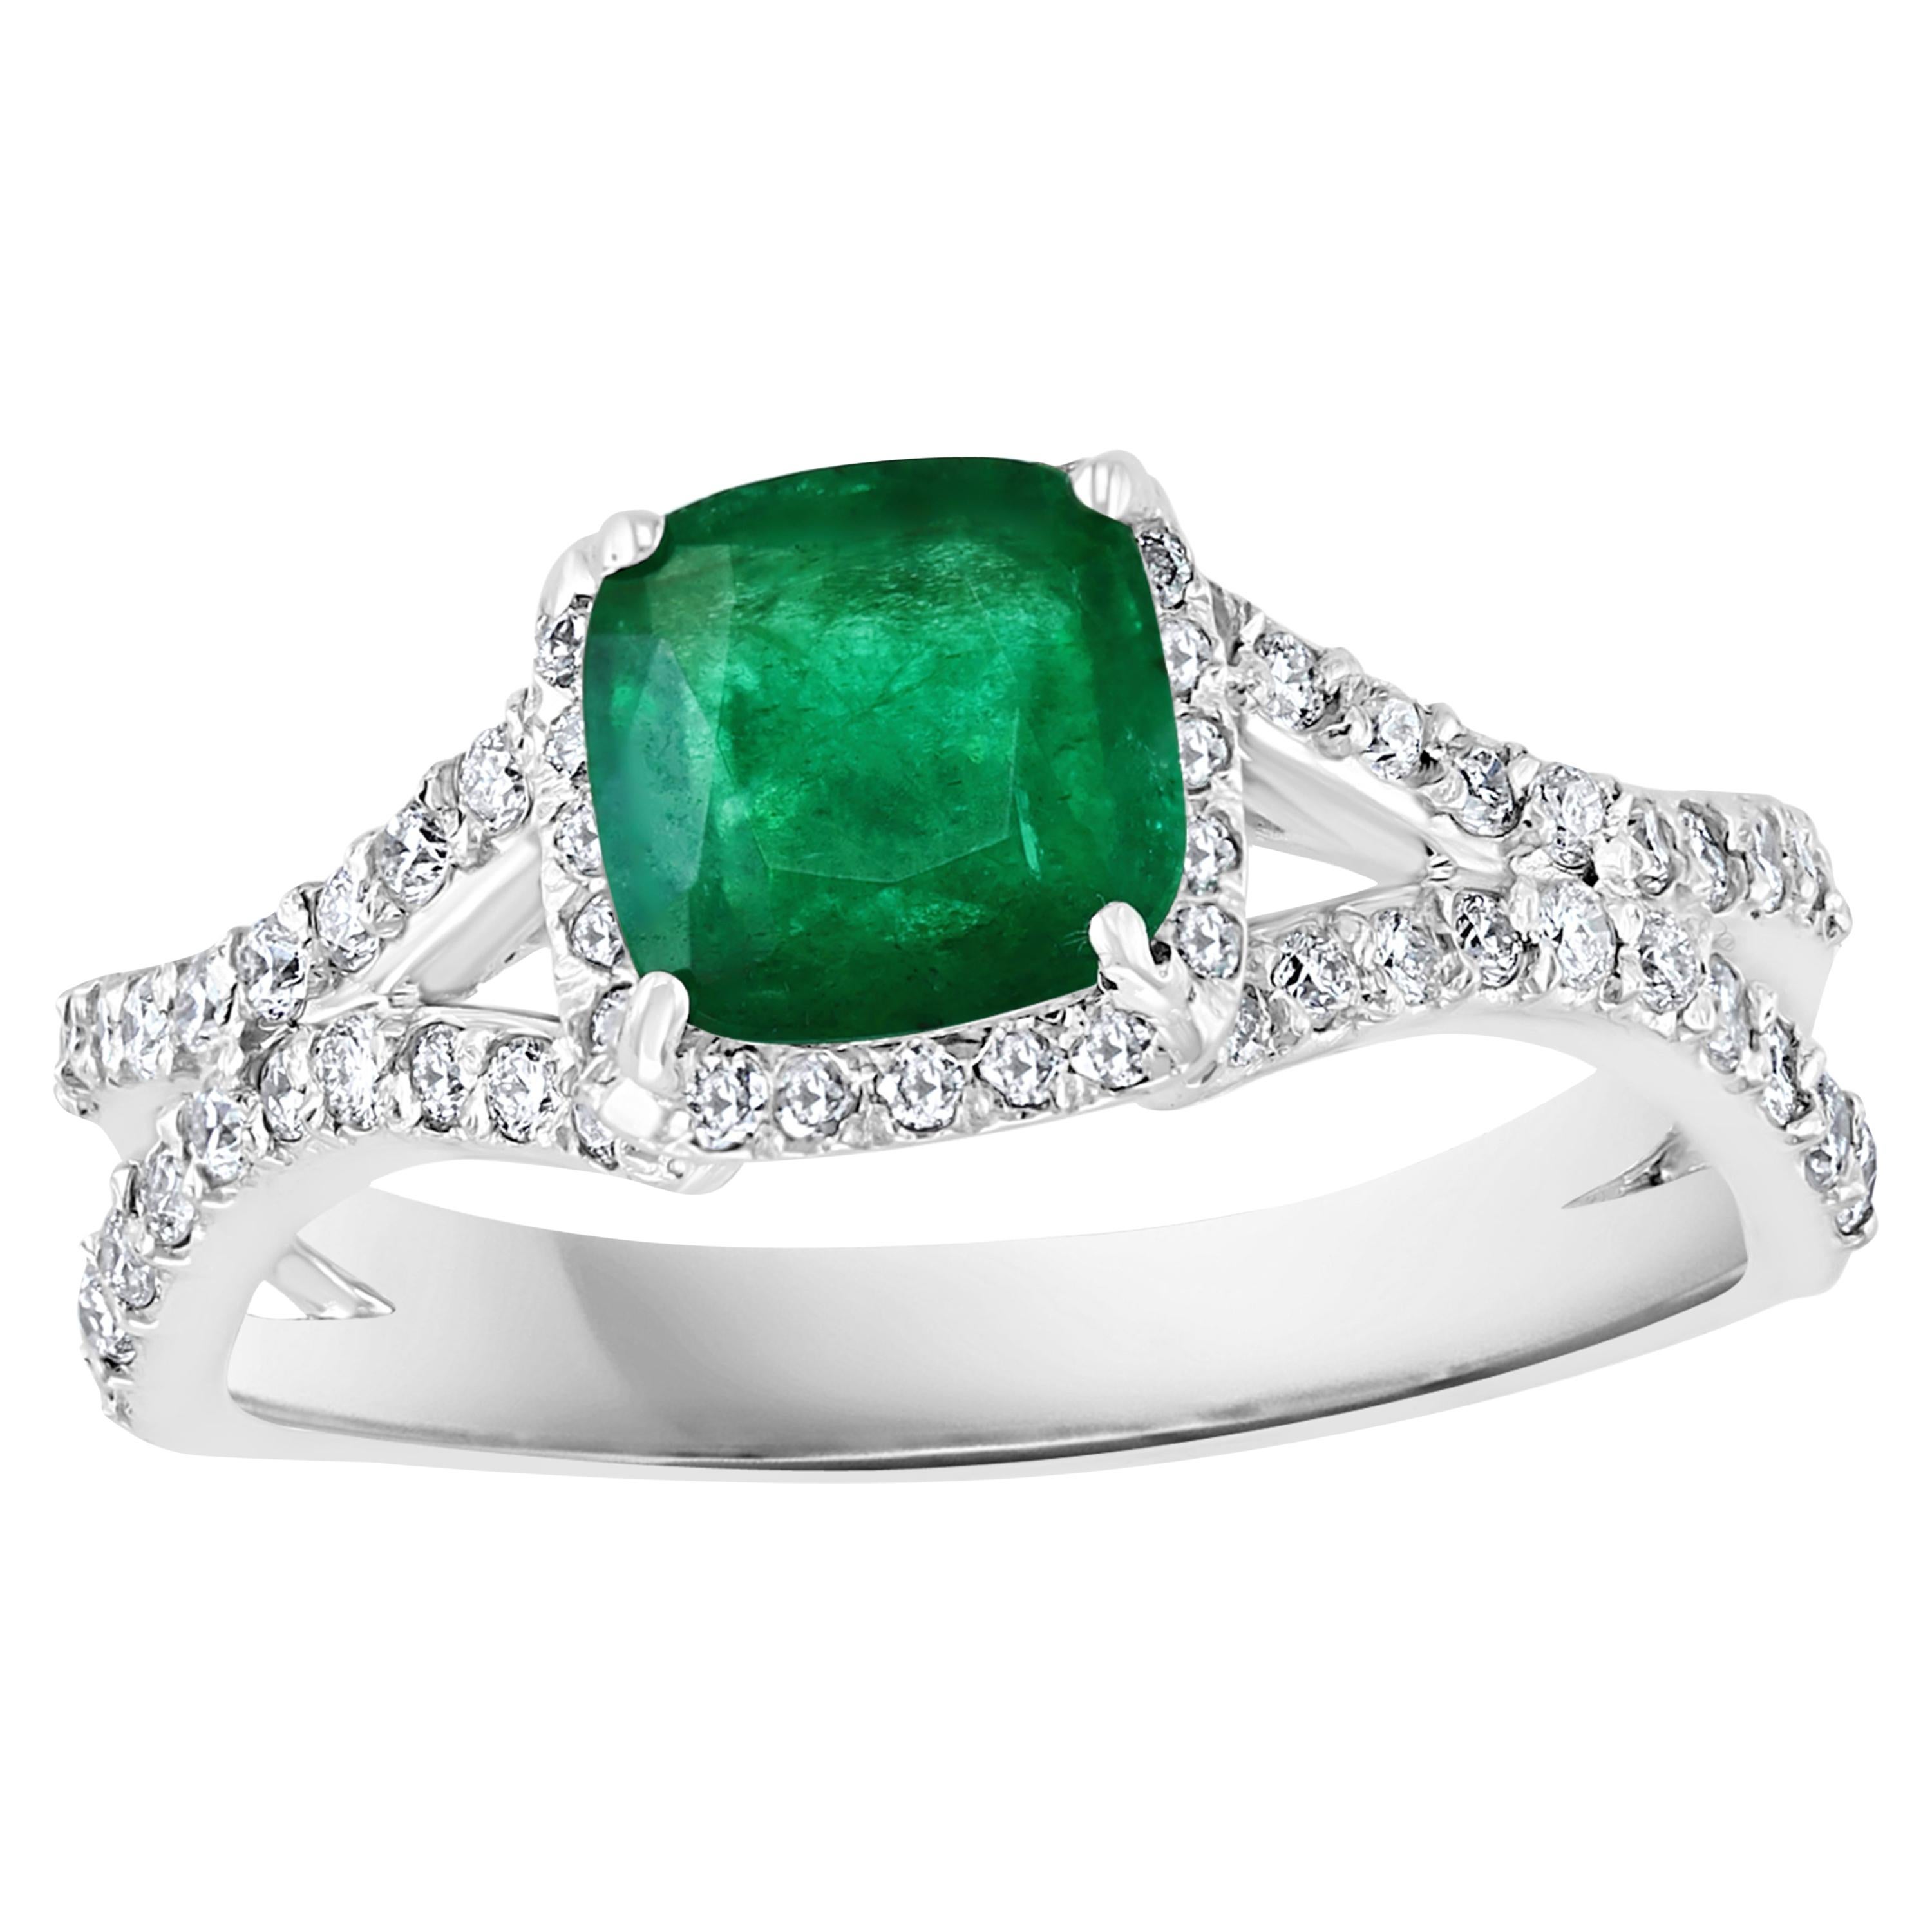 1.3 Carat Cushion Cut Emerald and 1.2 Carat Diamond Ring 14 Karat White Gold For Sale